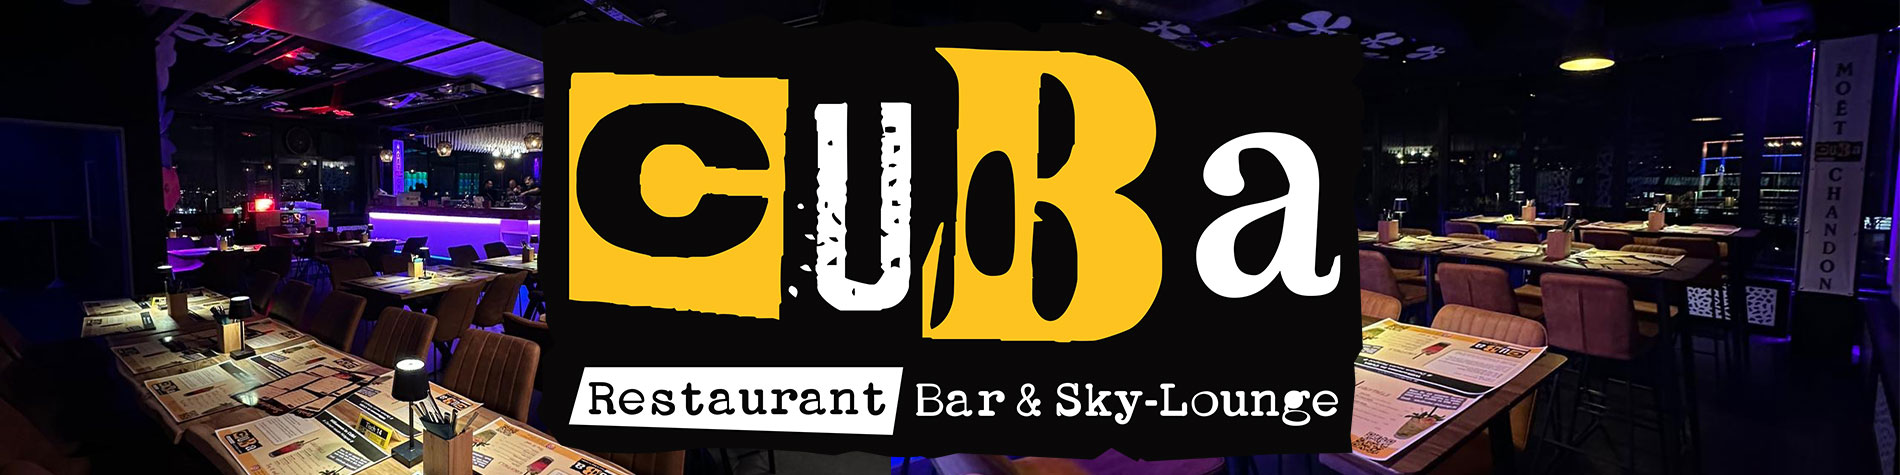 CuBa Restaurant / Bar & Sky-Lounge